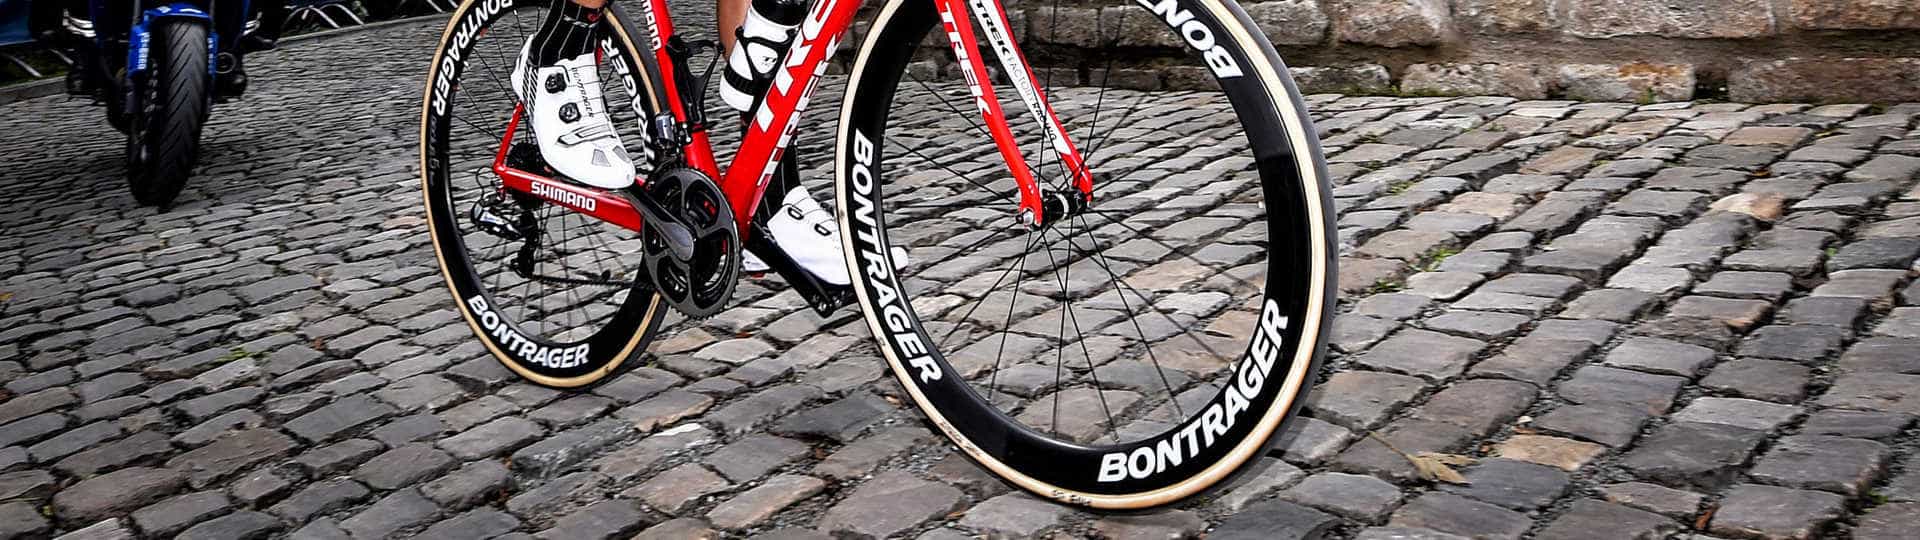 Bontrager Bike Wheels Sold Here!